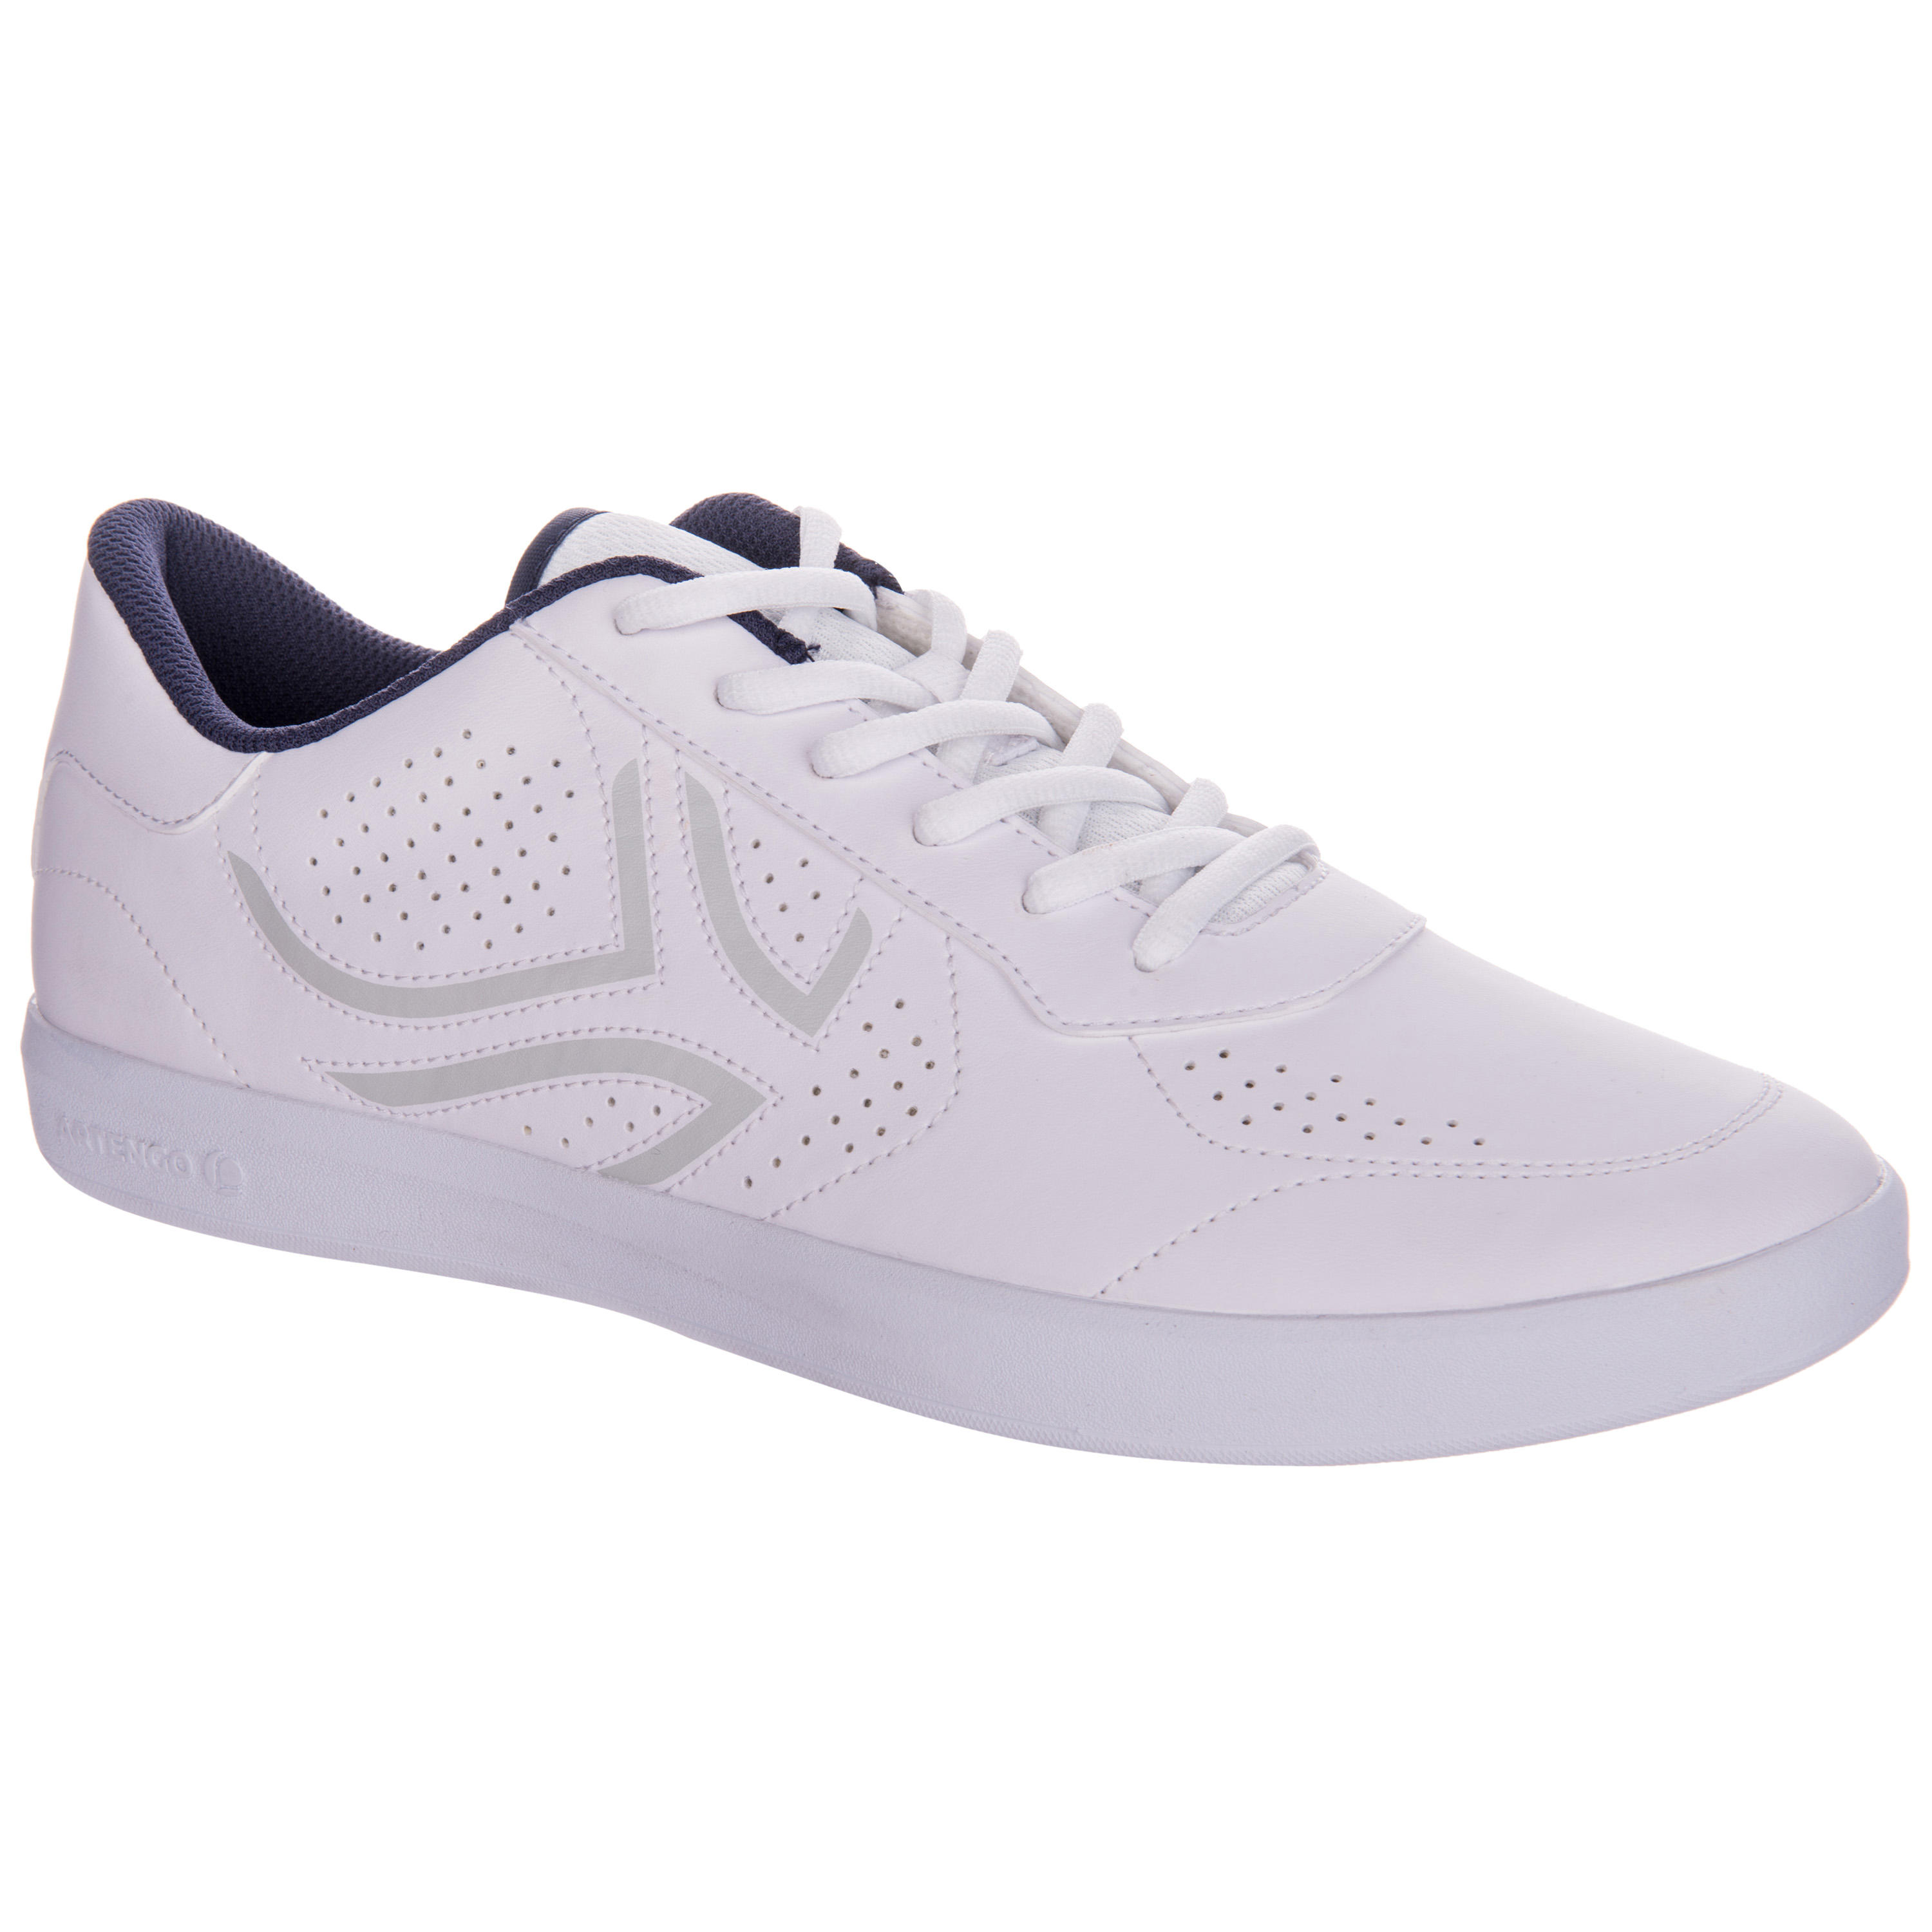 ARTENGO TS100 Multicourt Tennis Shoes - White